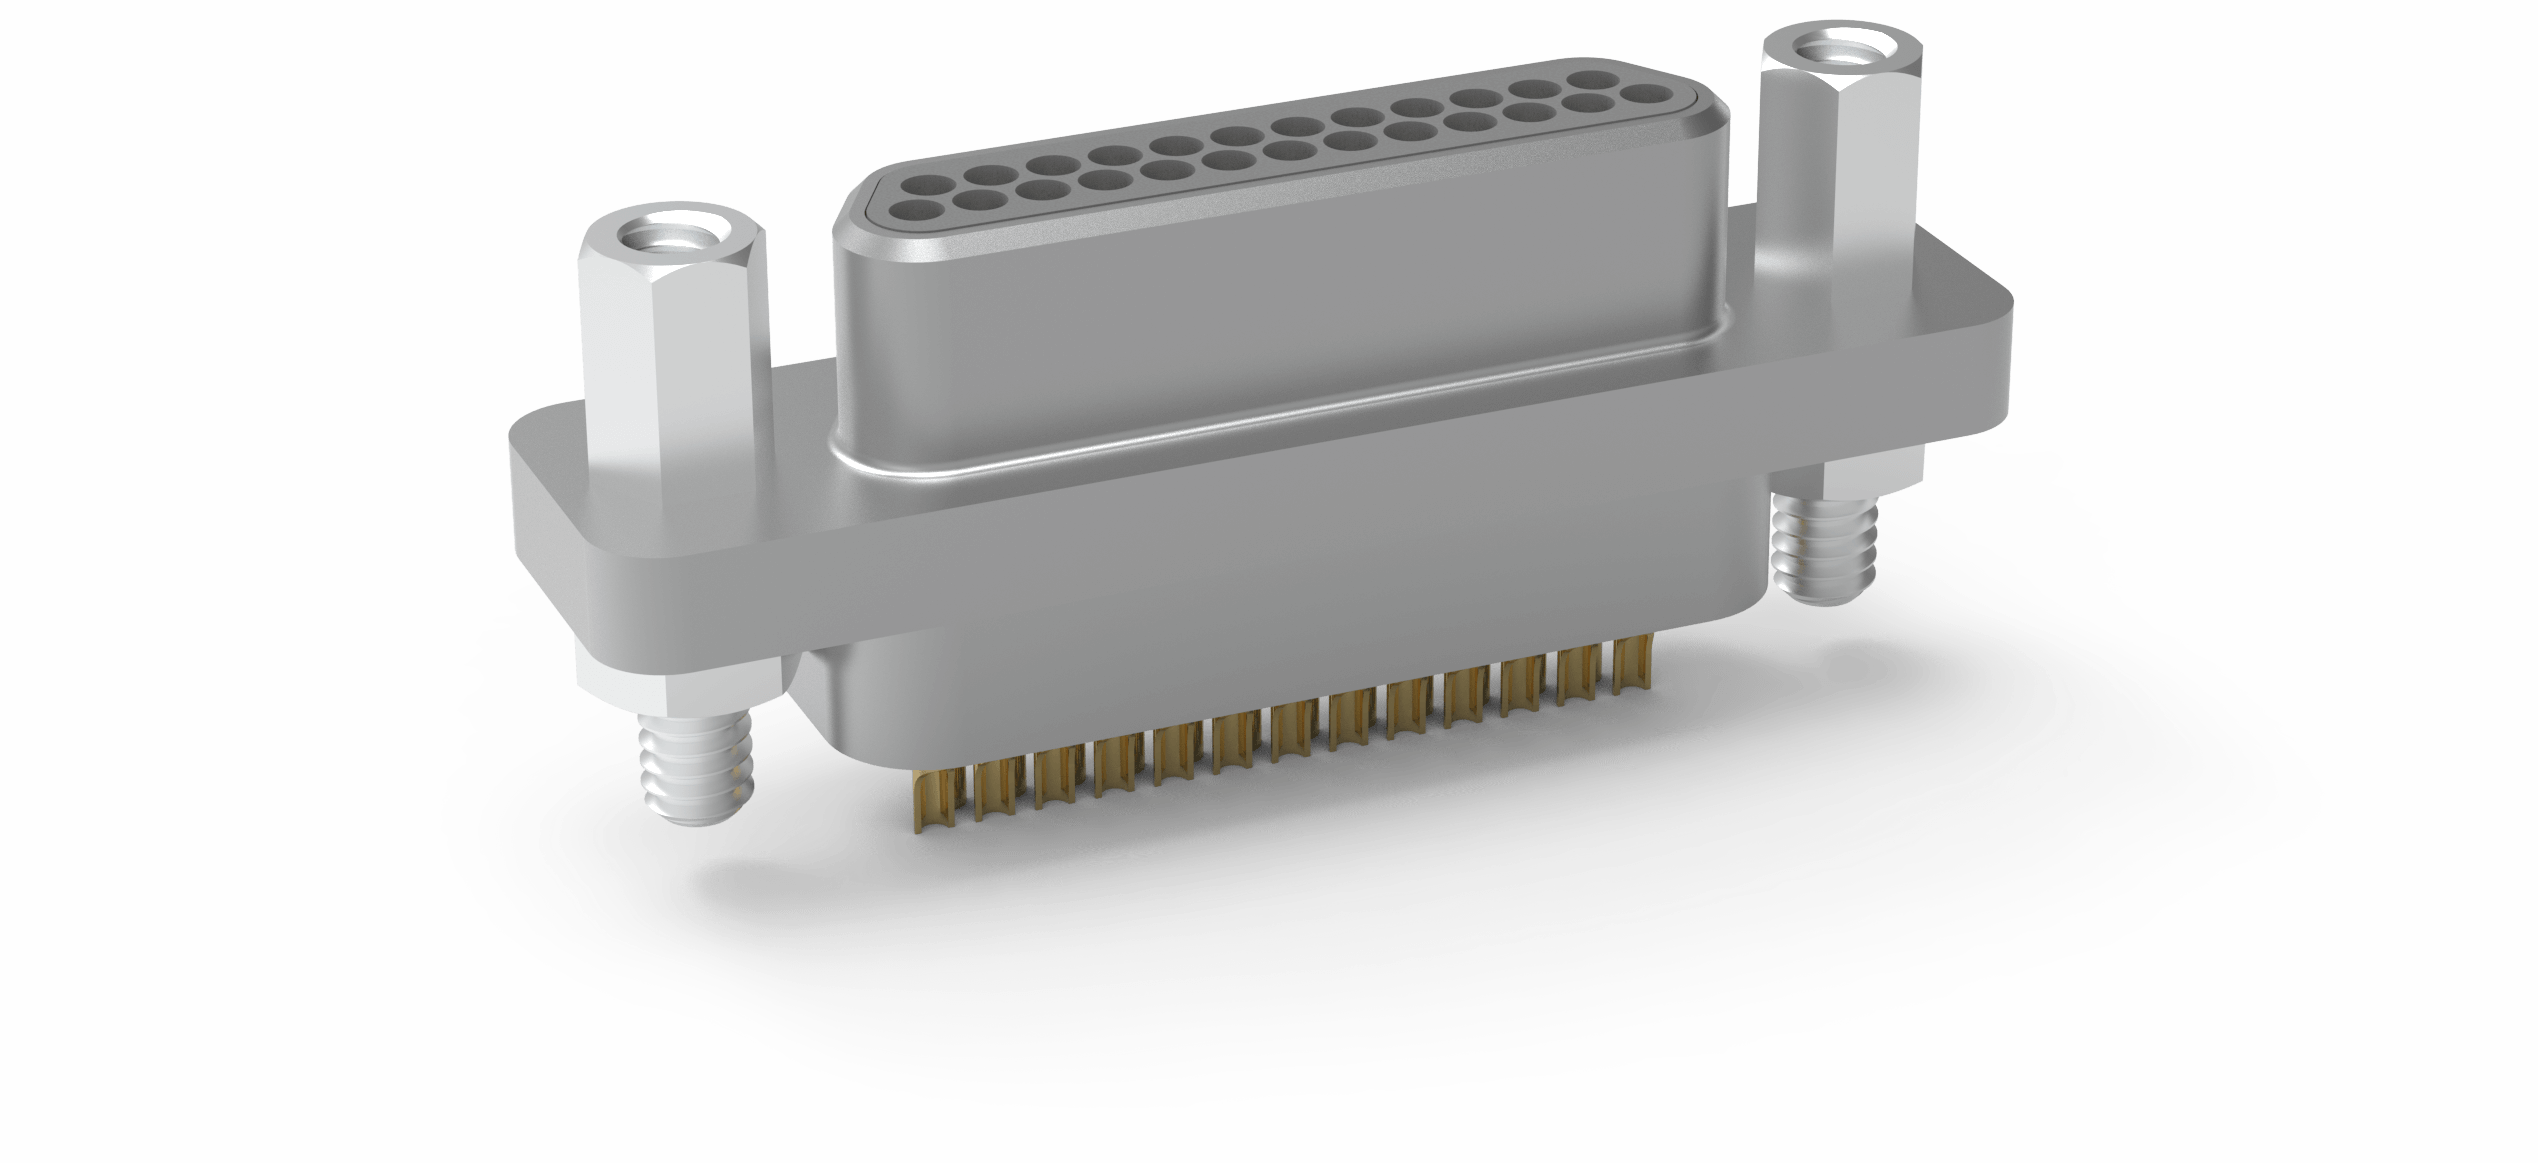 Conector 12V De Micro12 A Miniplug